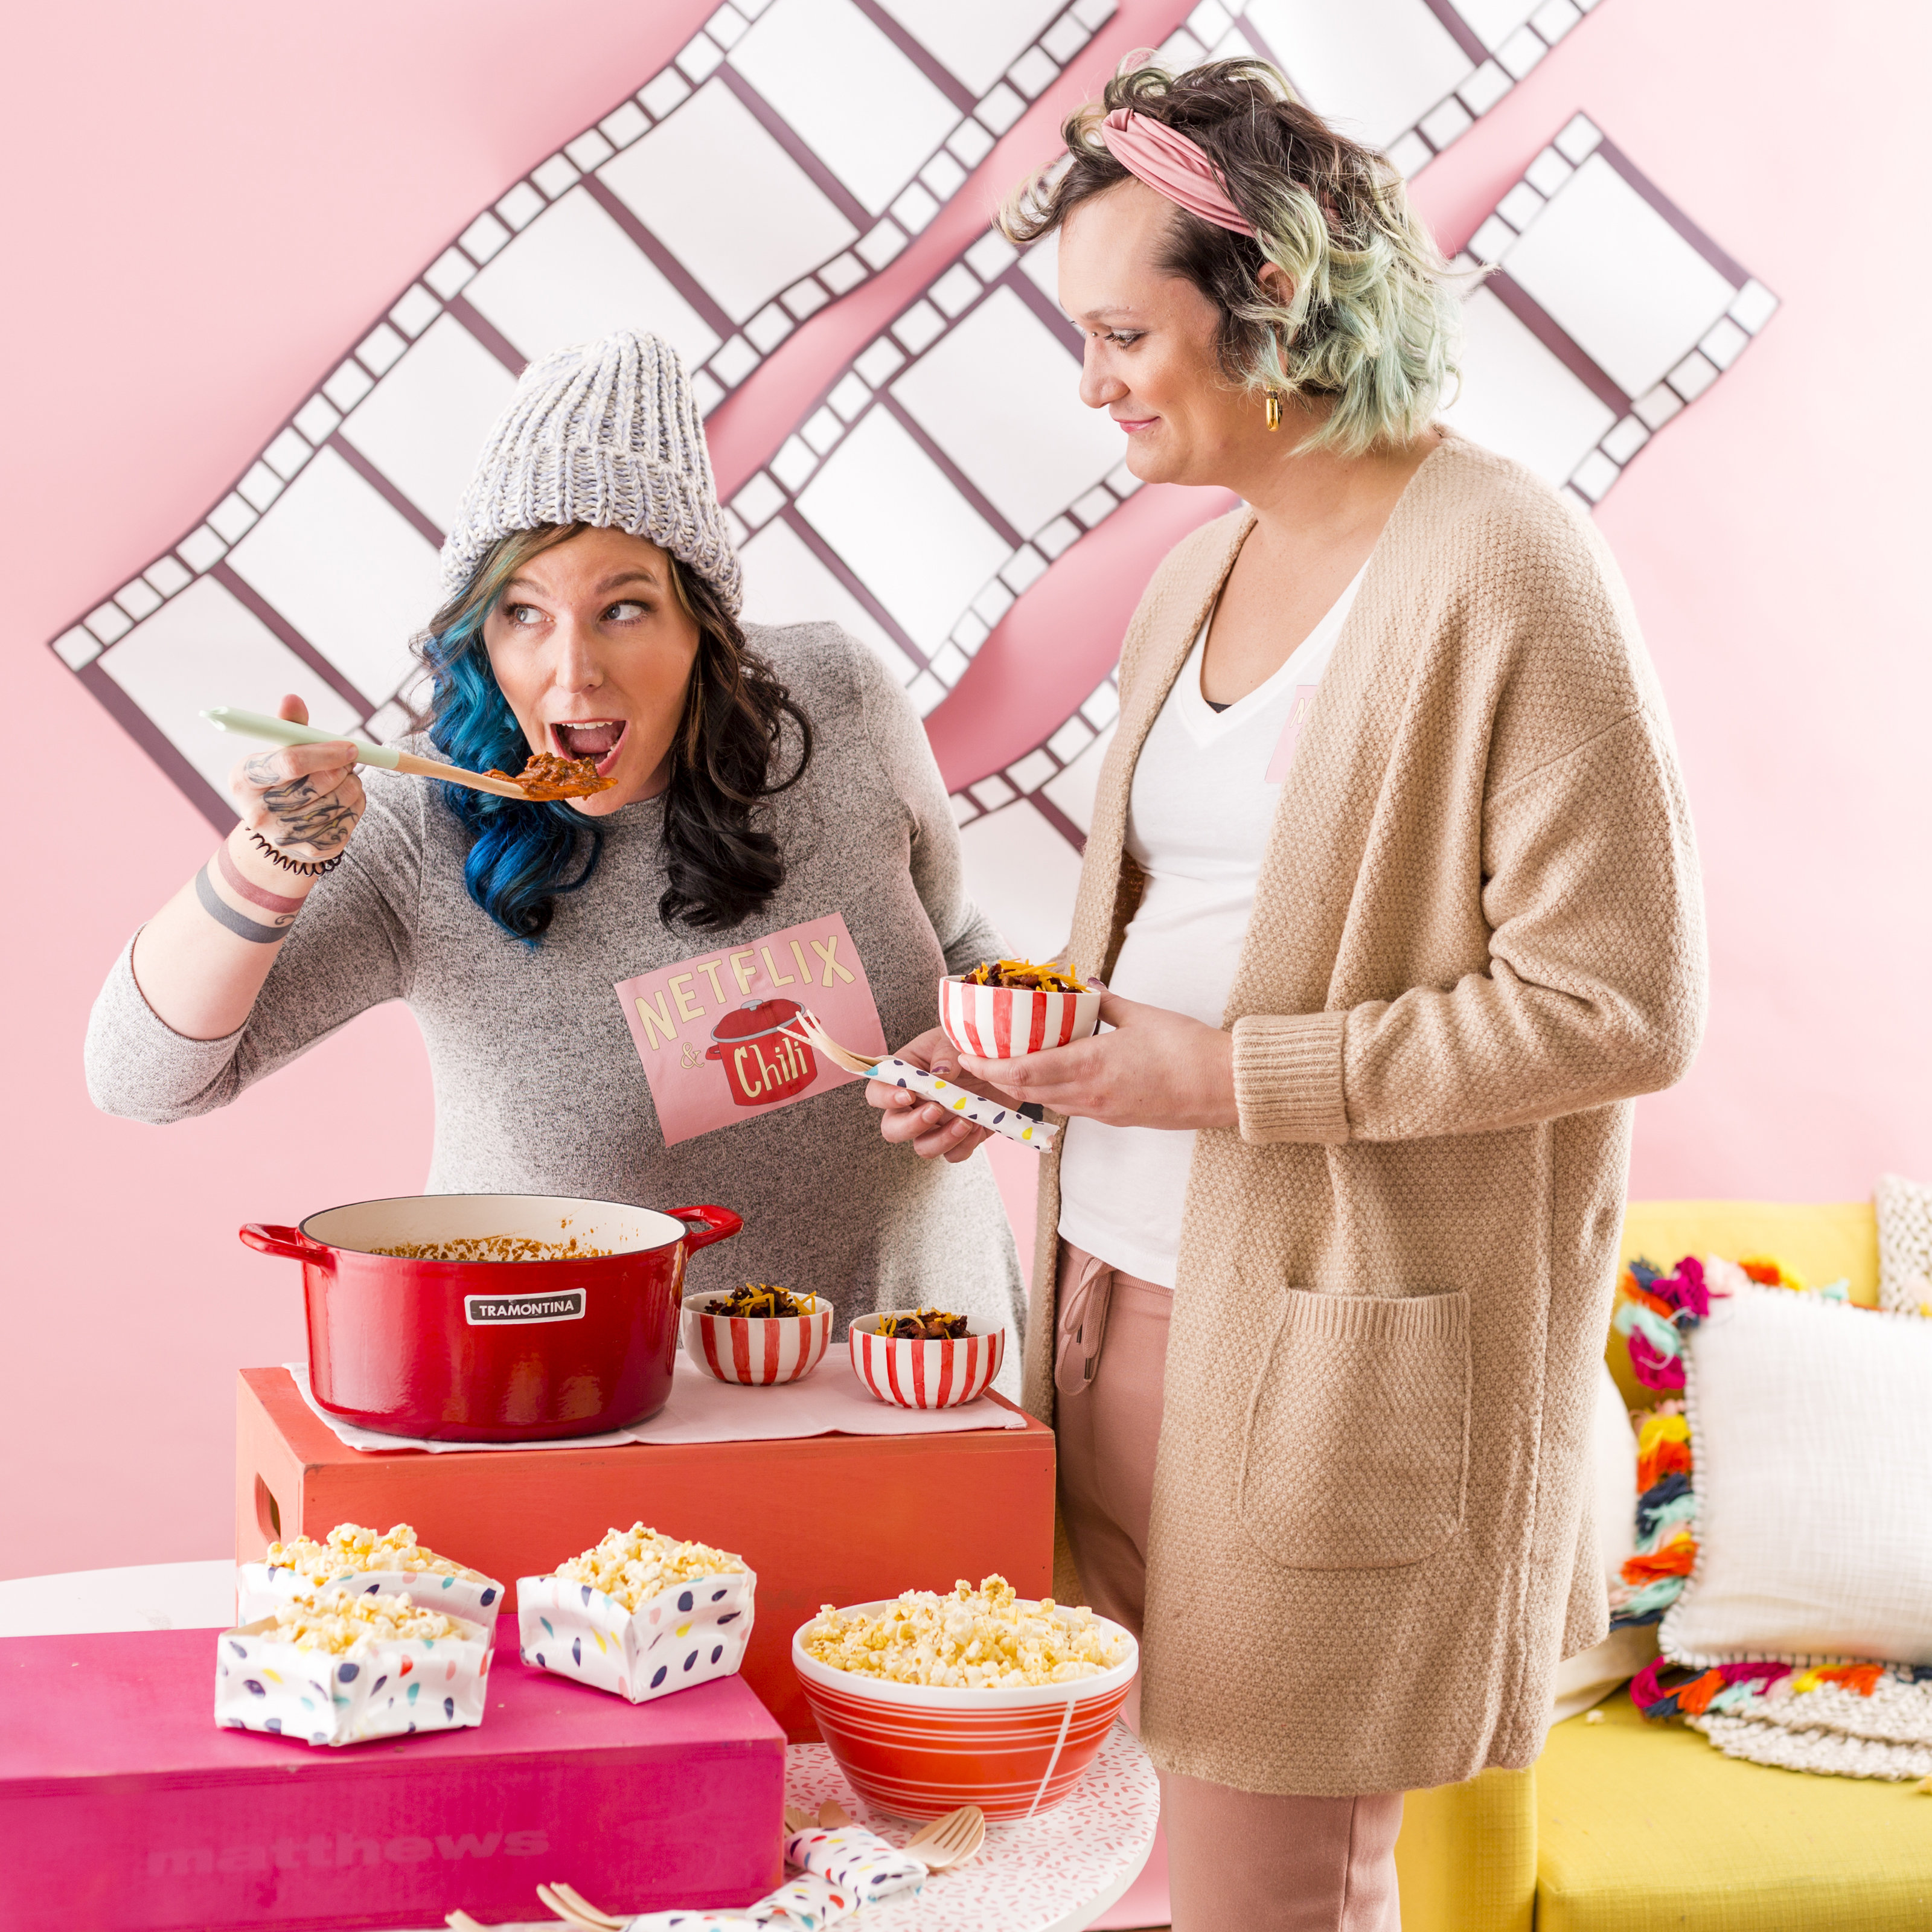 19 DIY Oscar Party Ideas - Decorations, Food, Bingo - Brit + Co